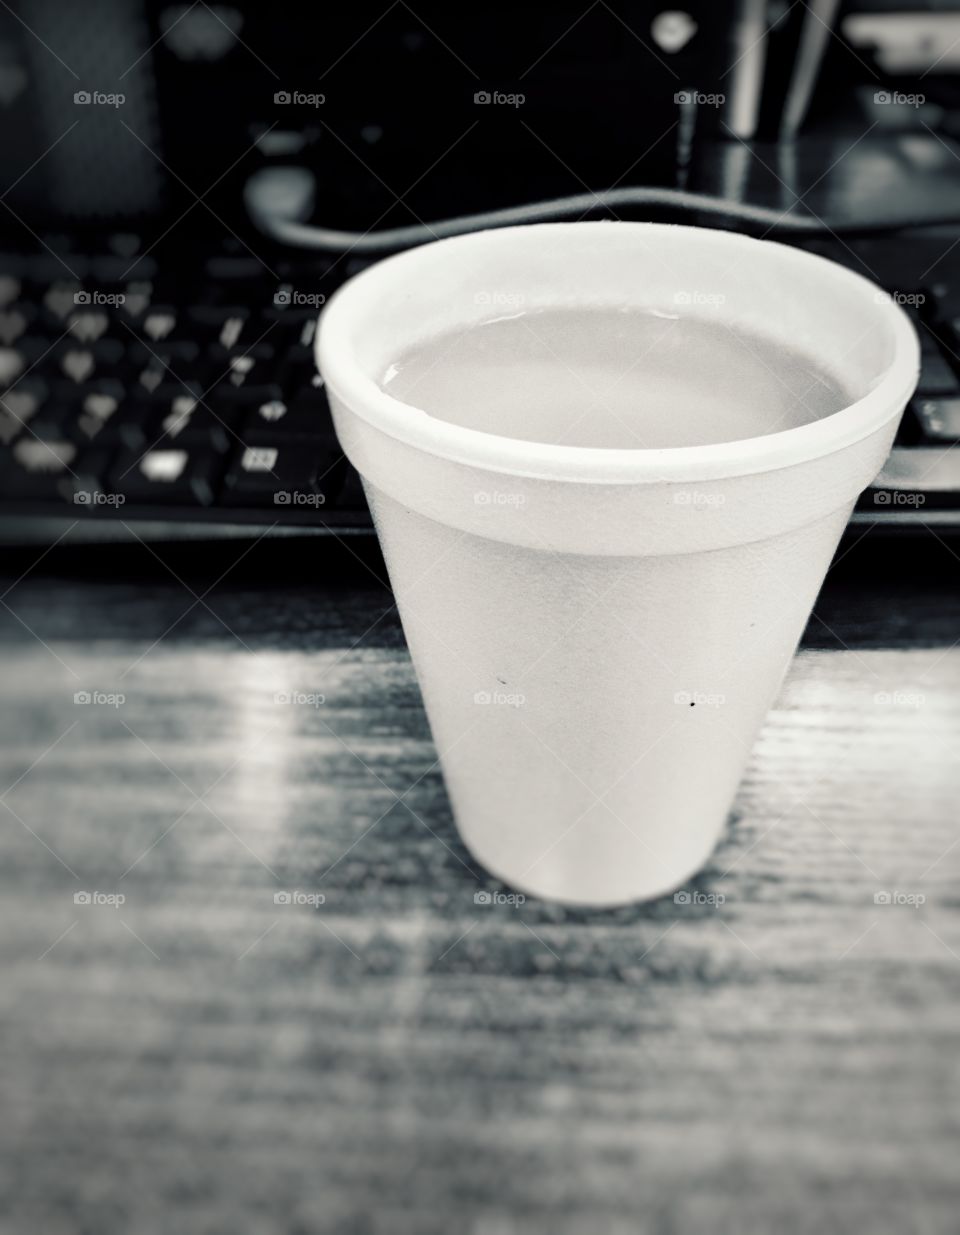 #coffee #tea #morning #break #drink #work